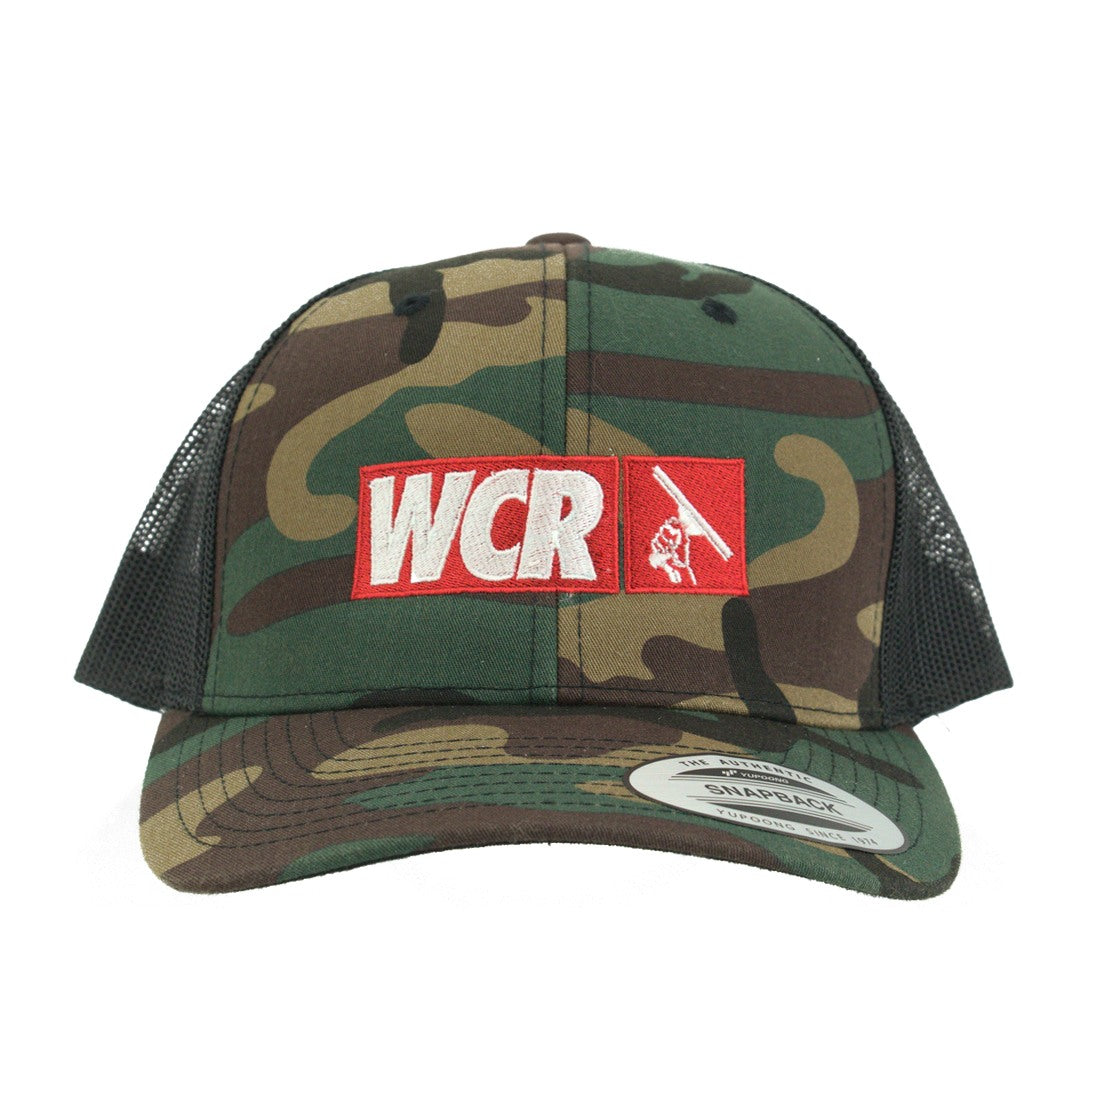 WCR Camo Hat Front View